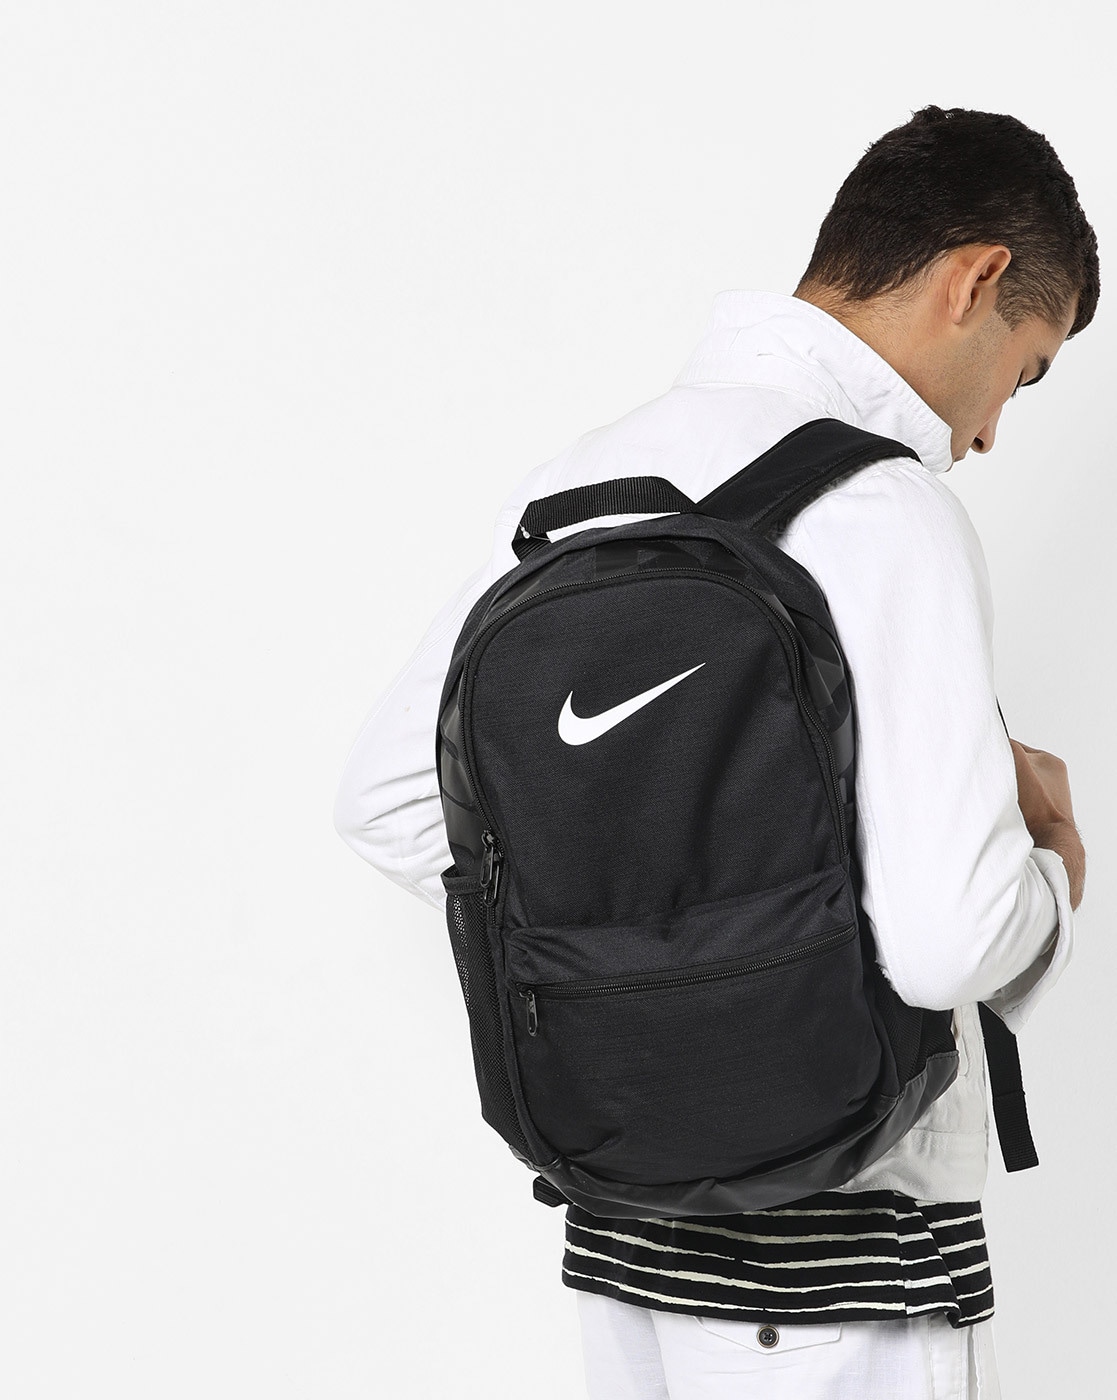 Nike Bags and Luggage in Dubai, UAE | Buy Nike Bags Online | SSS